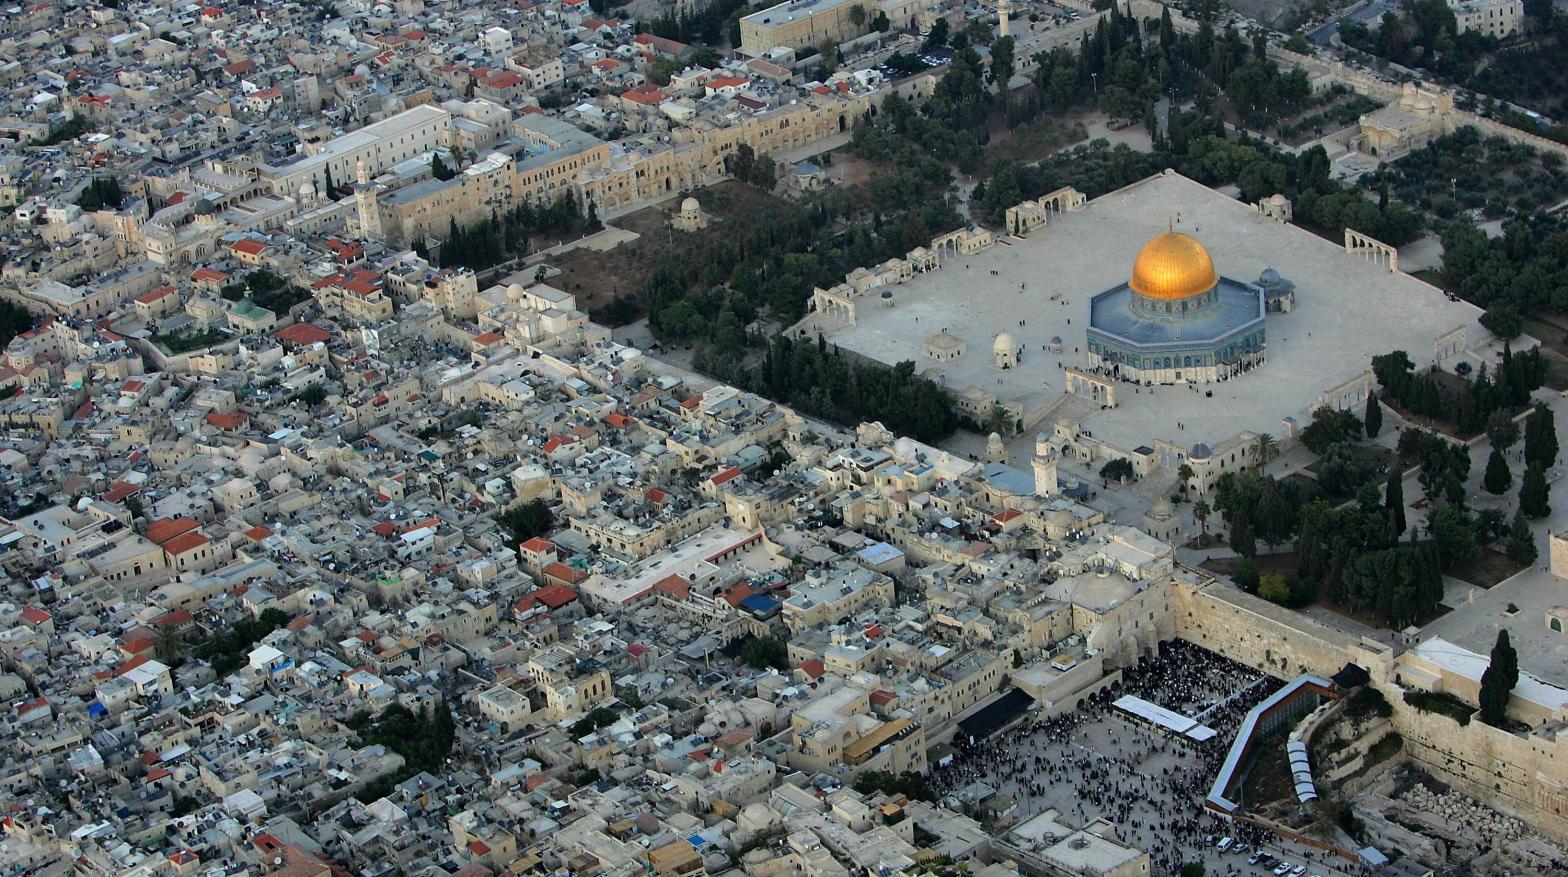 The Old City of Jerusalem. (Photo: David Silverman, Getty Images)